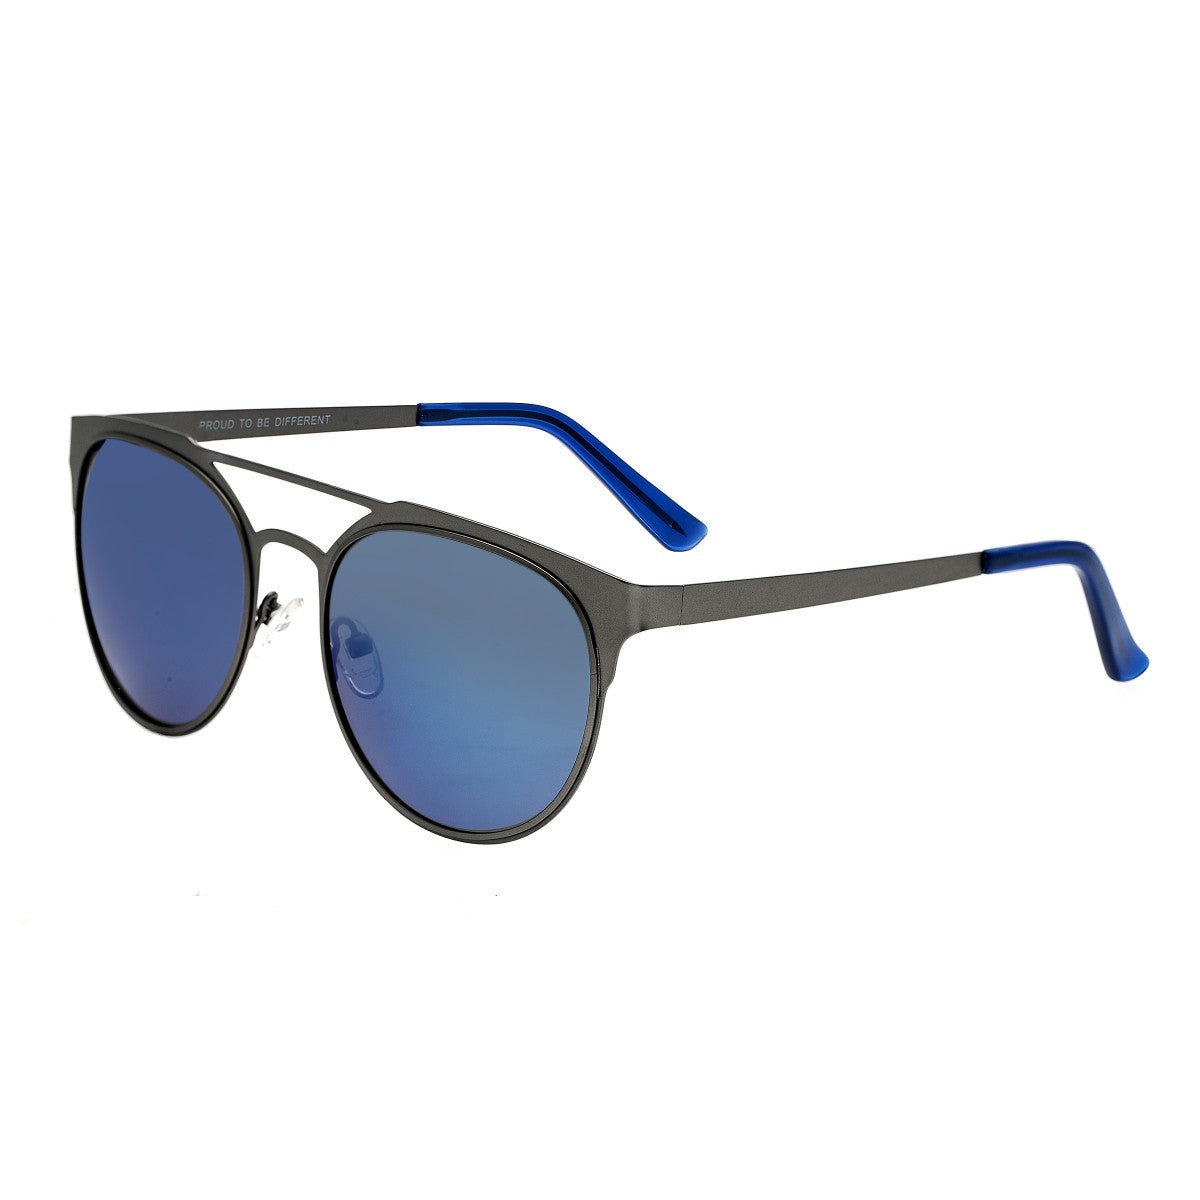 Breed Mensa Titanium Polarized Sunglasses - Gunmetal/Blue - BSG037GM